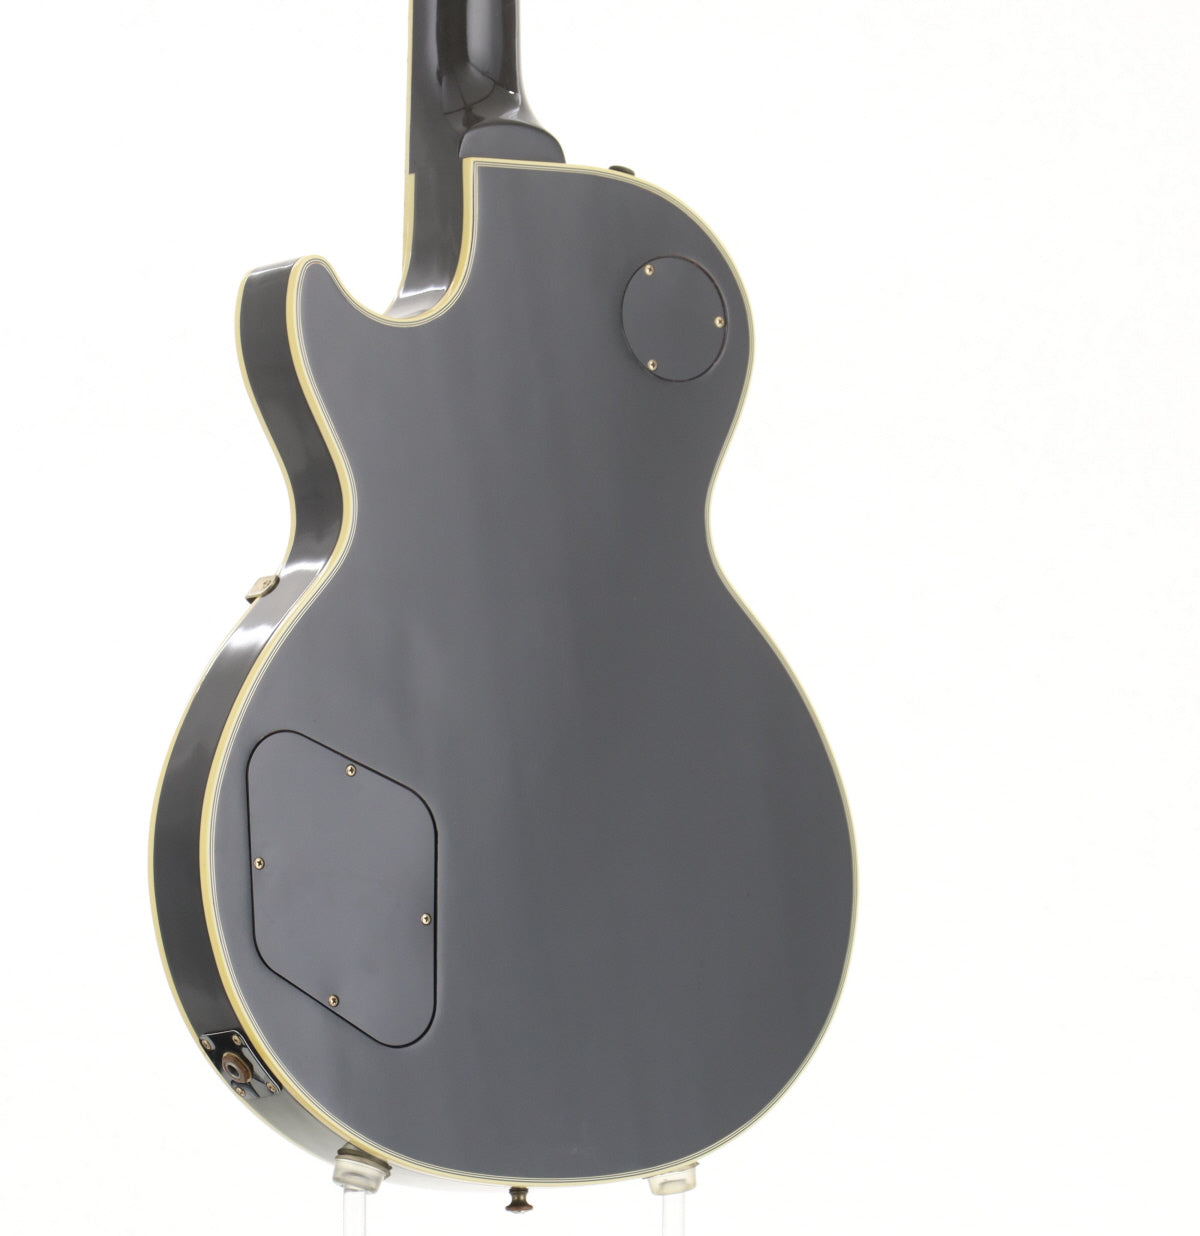 [SN 046108] USED Gibson Custom / 1968 LesPaul Custom Ebony [03]